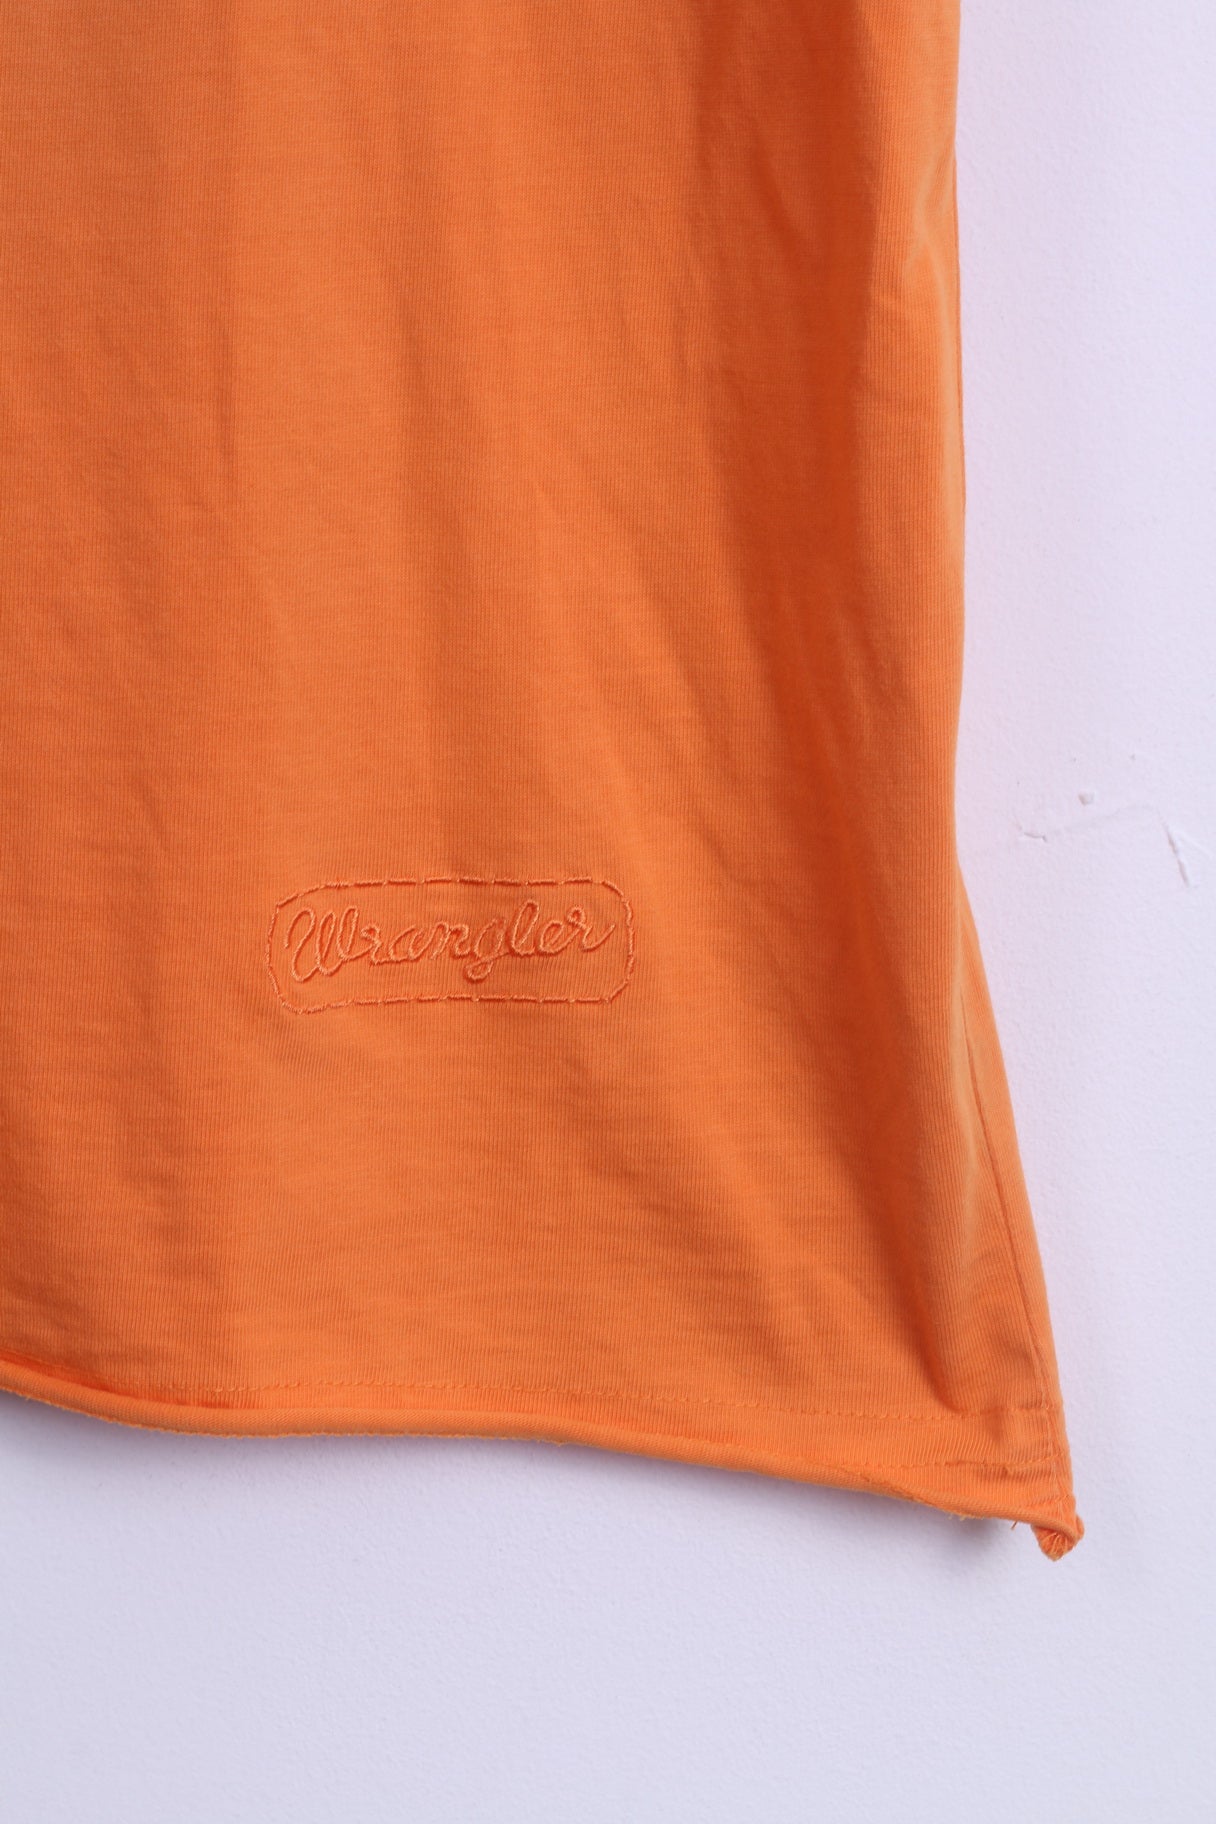 Wrangler Mens XL T-Shirt Orange Cotton Crew Neck Amazon Embroidered Back